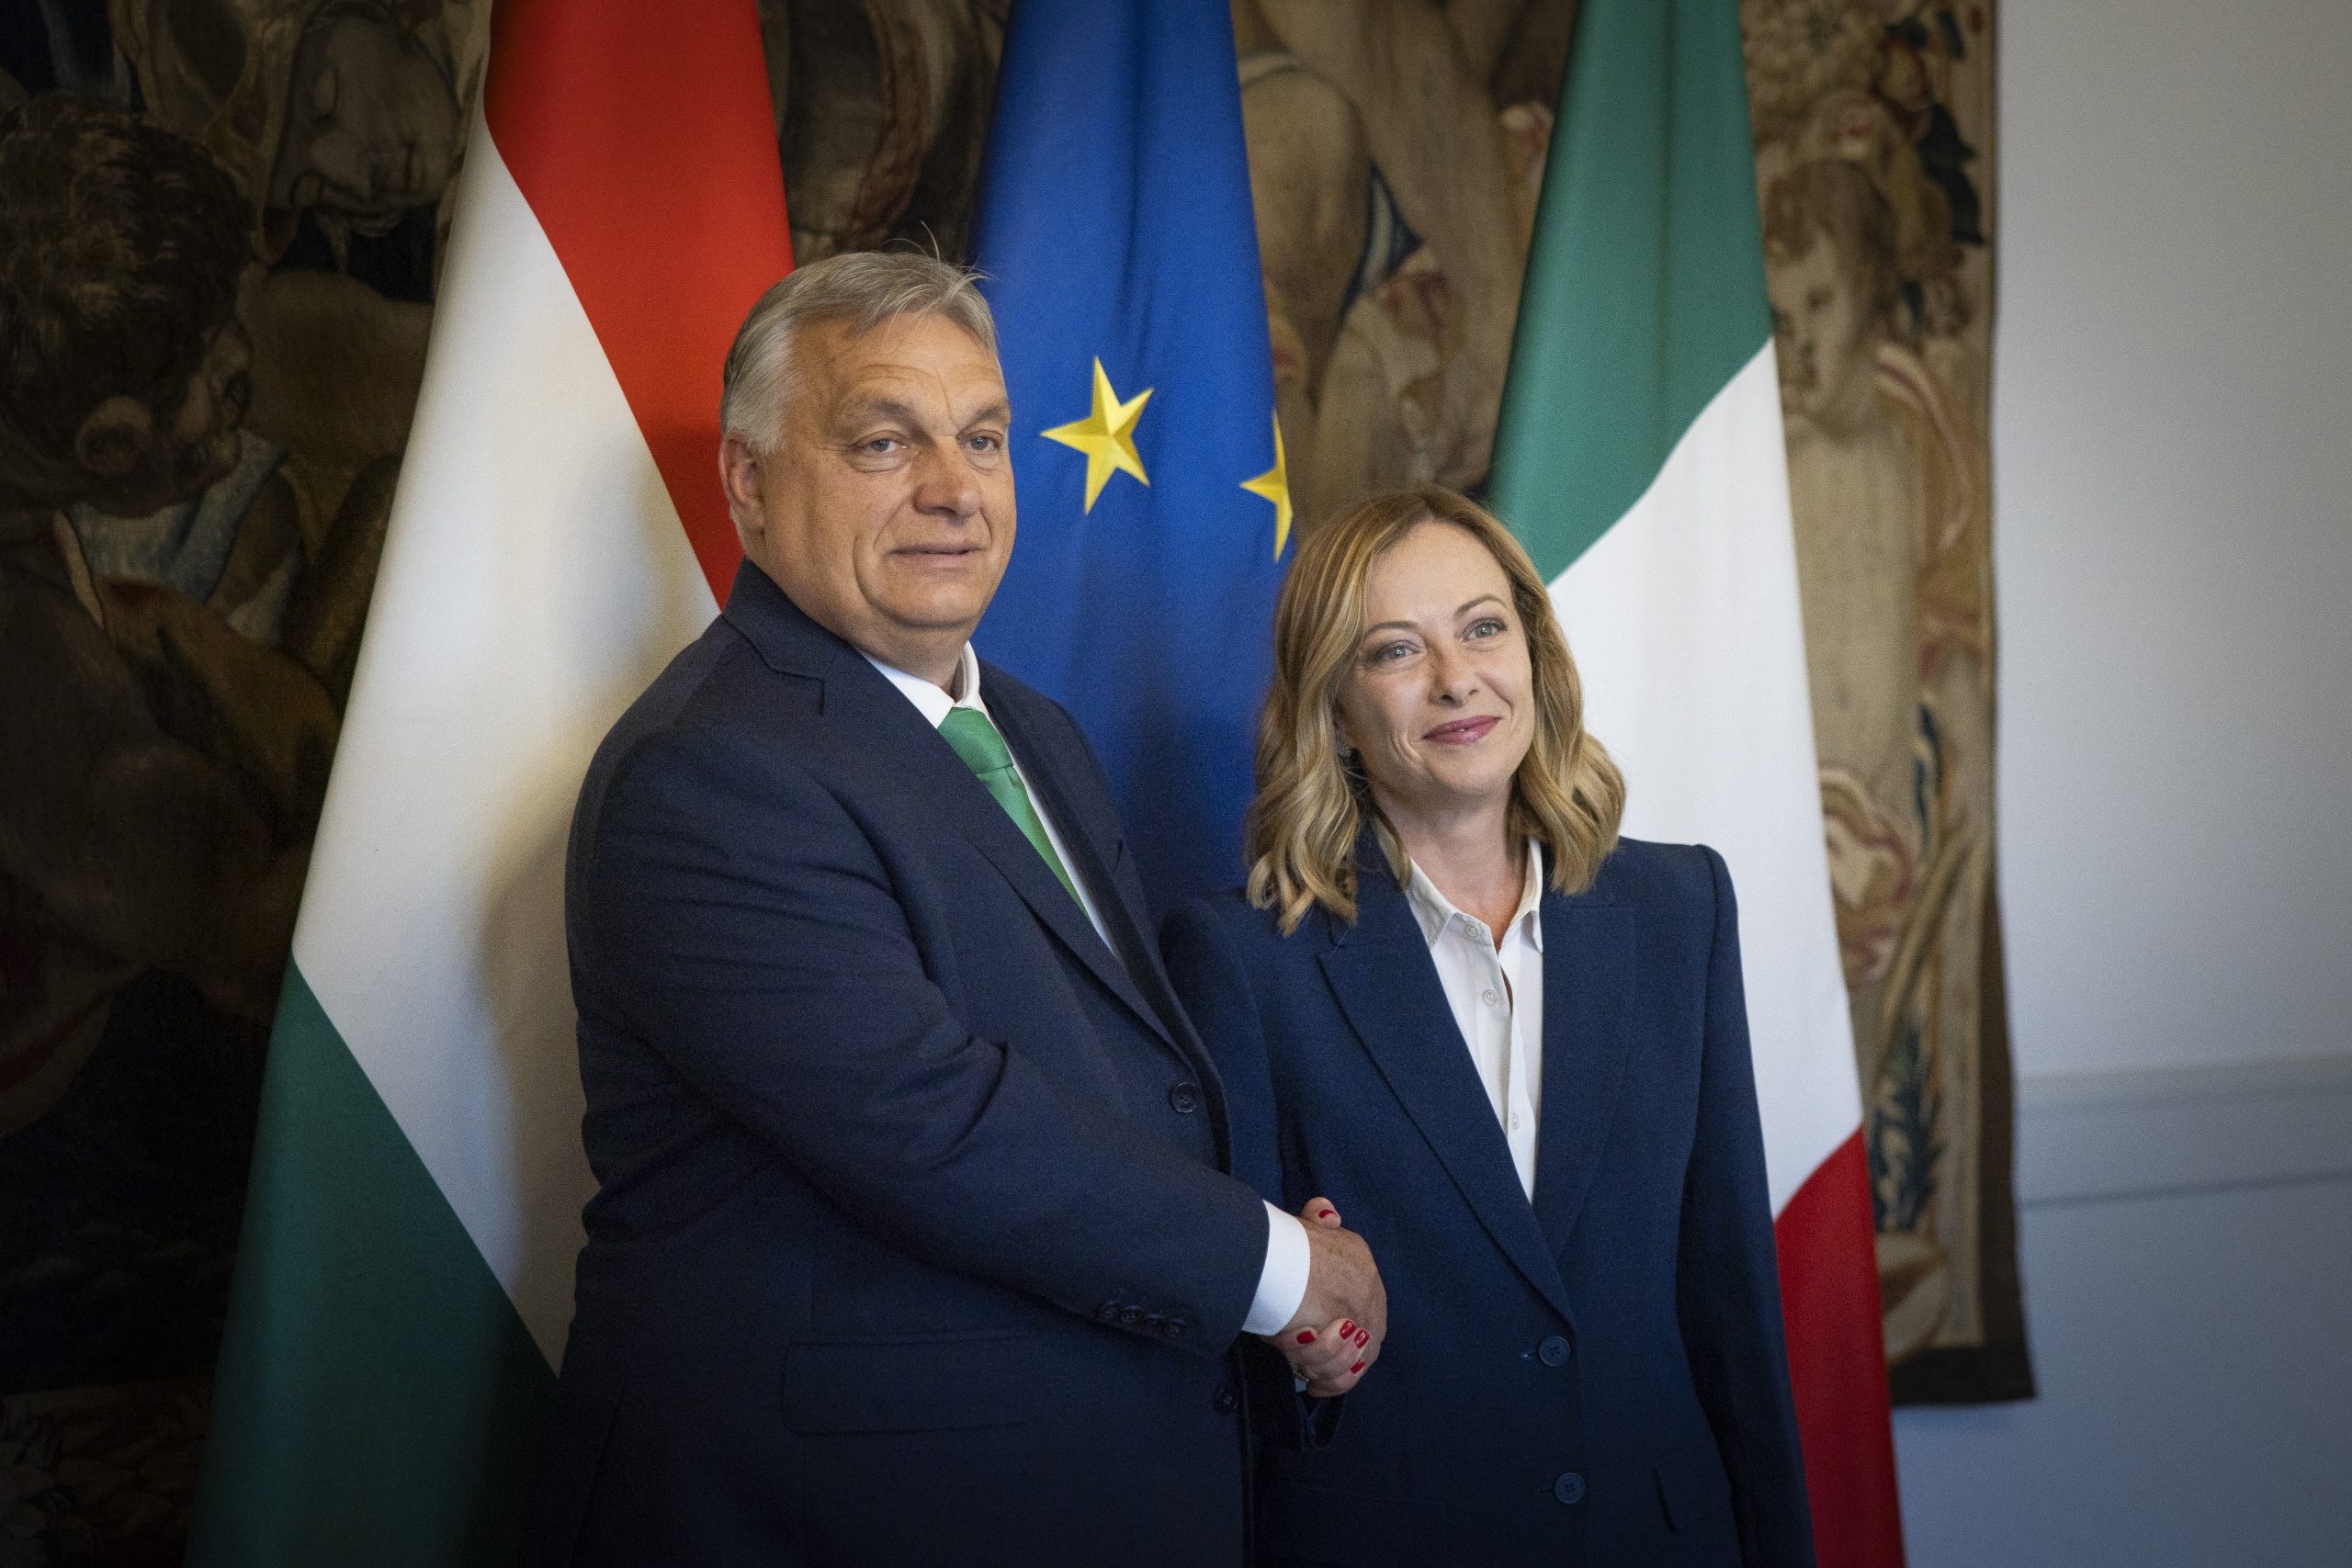 Viktor Orbán im Gespräch mit Giorgia Meloni in Rom